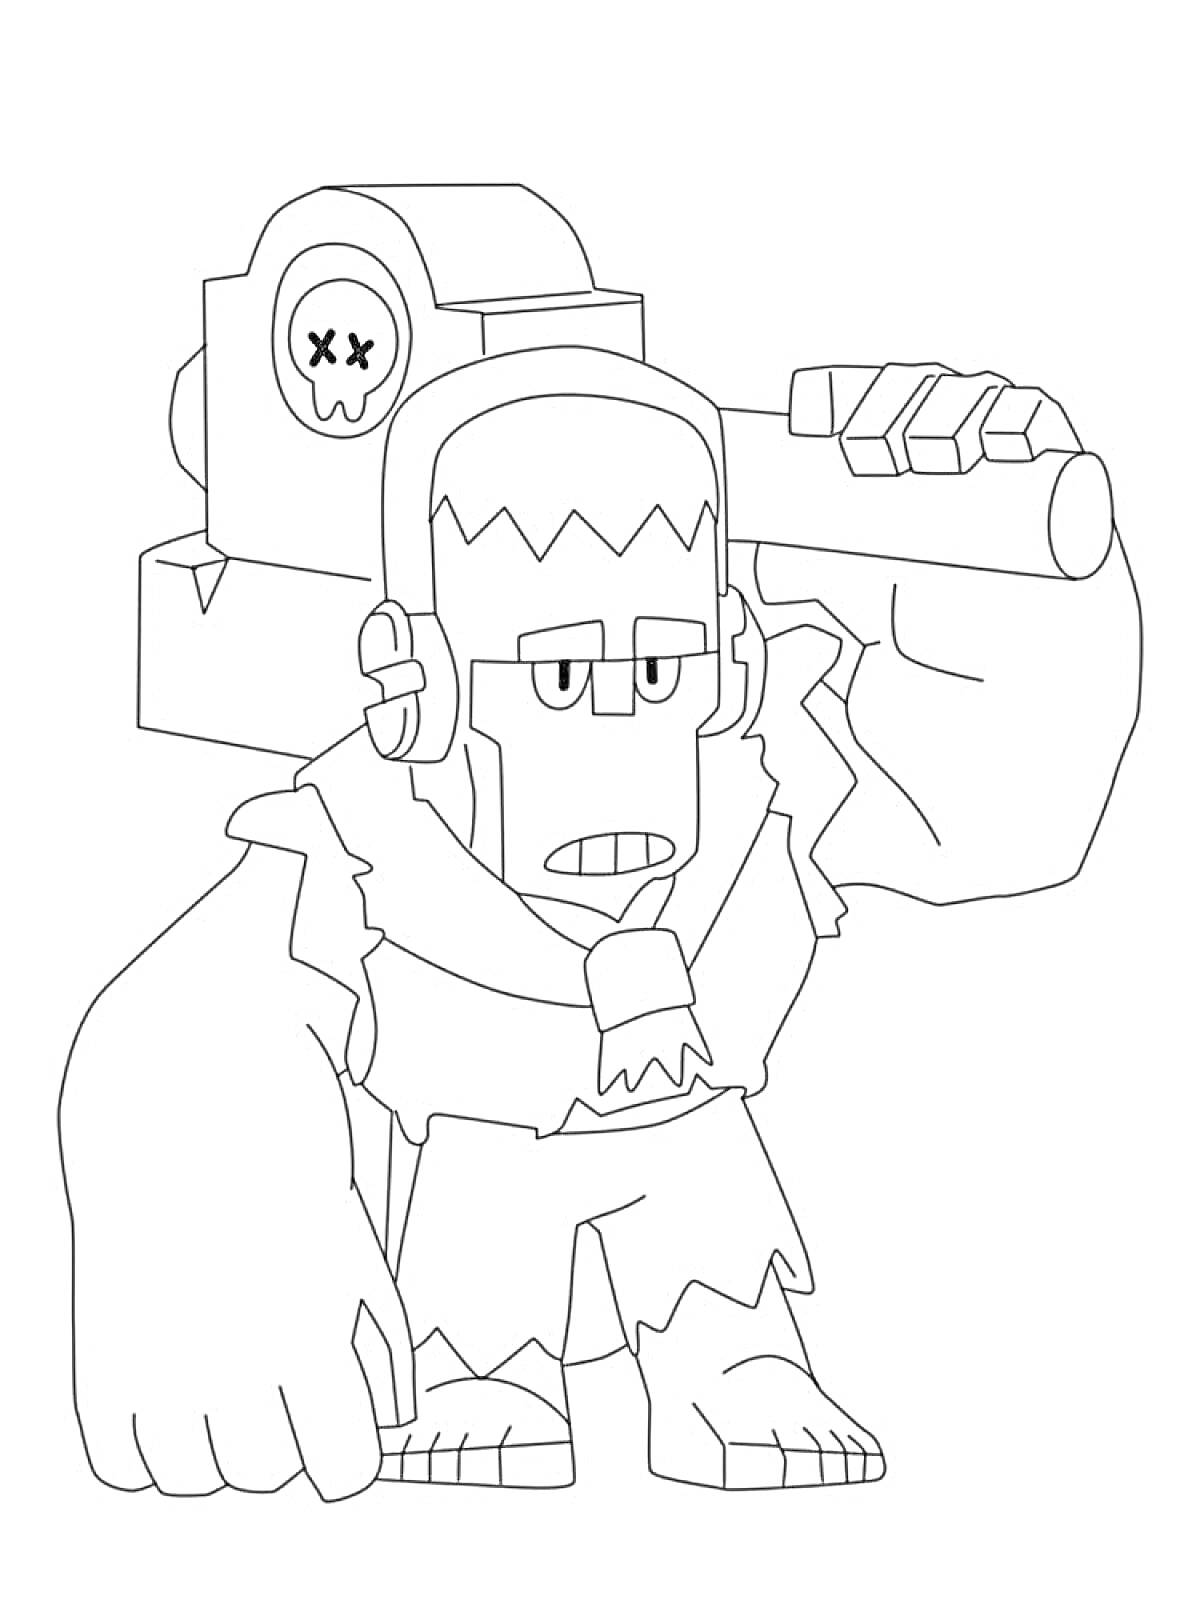 Раскраска Раскраска персонажа Фрэнк из игры Brawl Stars с большым молотом на плече